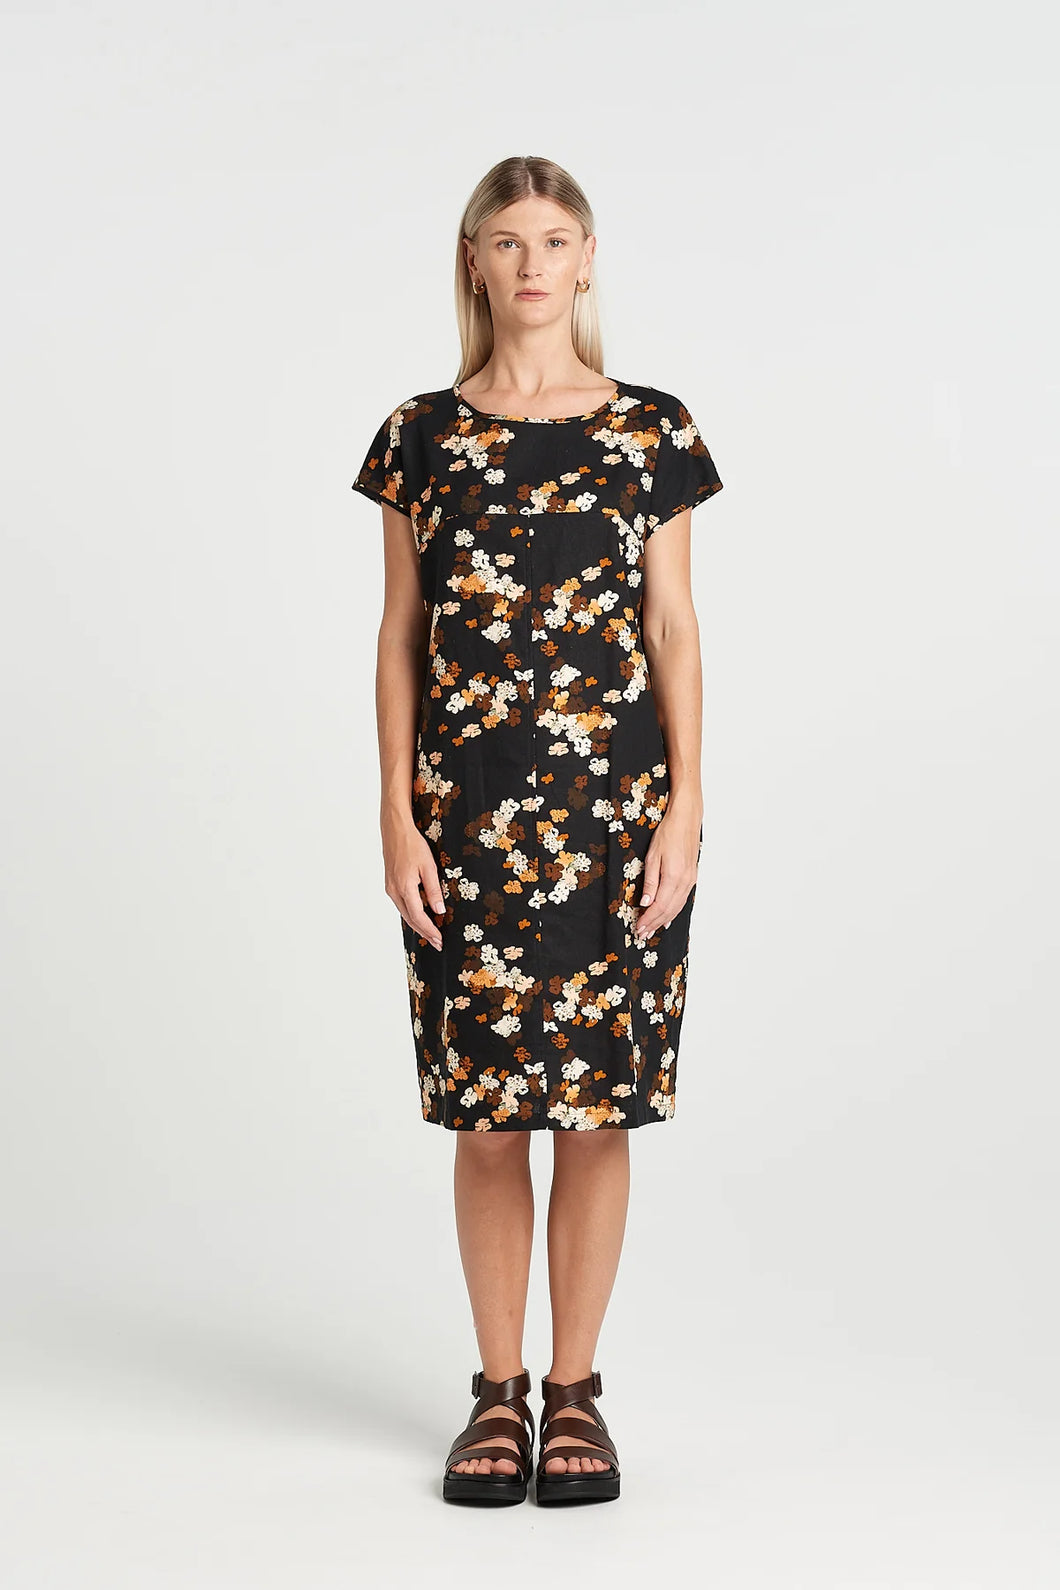 Nyne Graphic Dress - Flora Print  Hyde Boutique   